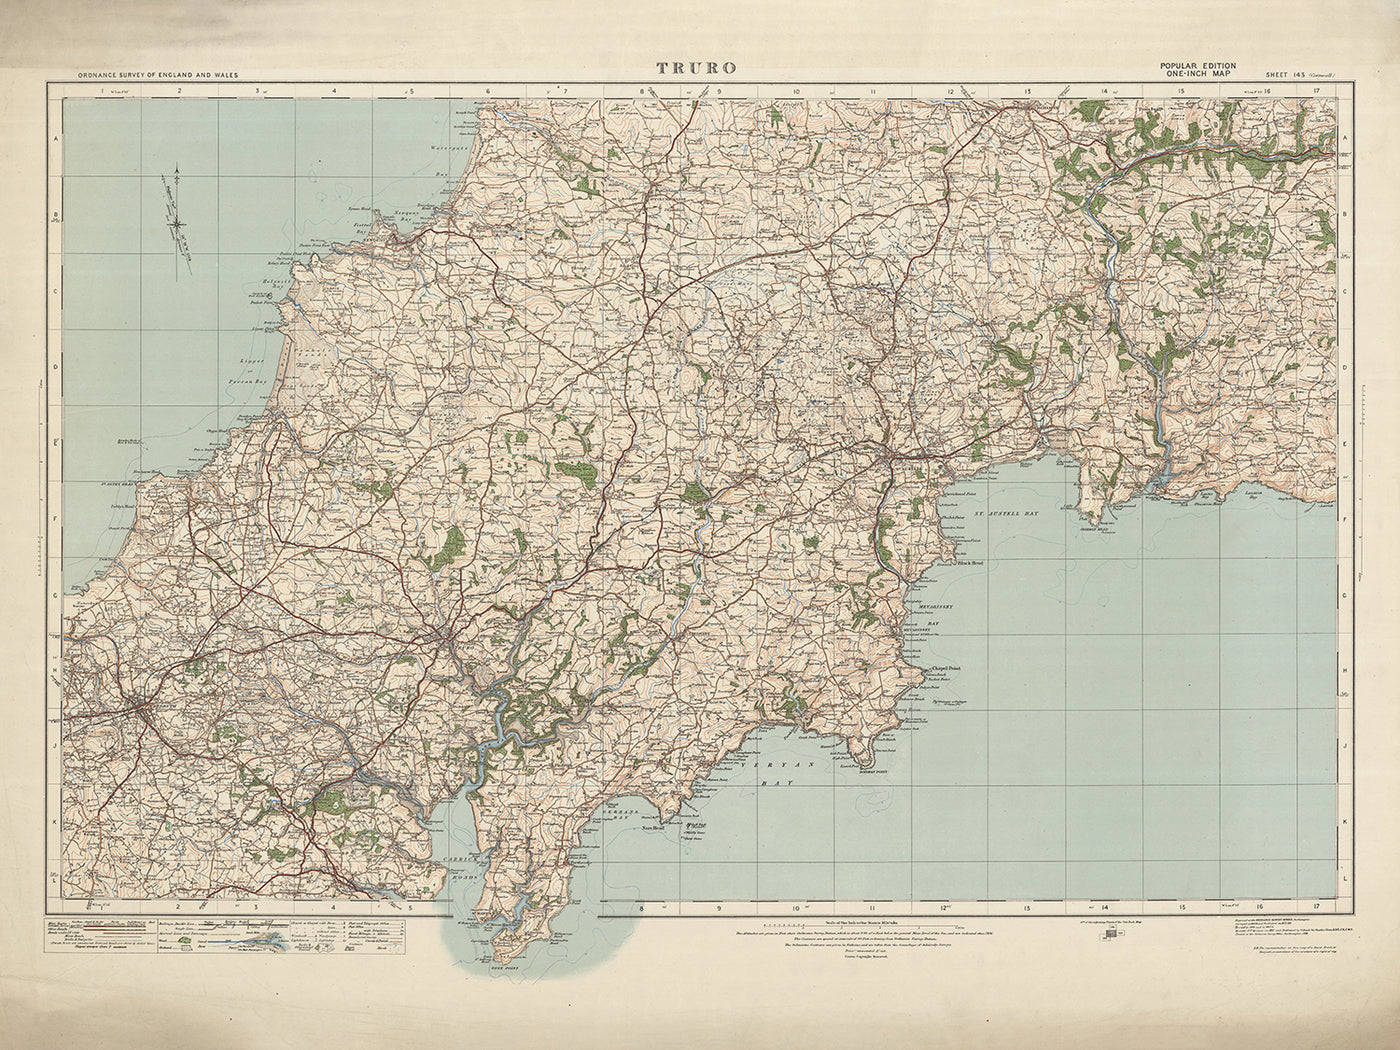 Mapa antiguo del Ordnance Survey, hoja 143 - Truro, 1919-1926: Newquay, St Austell, Roche, Bodmin, Río Fal, Carn Brea Hill y Goss Moor